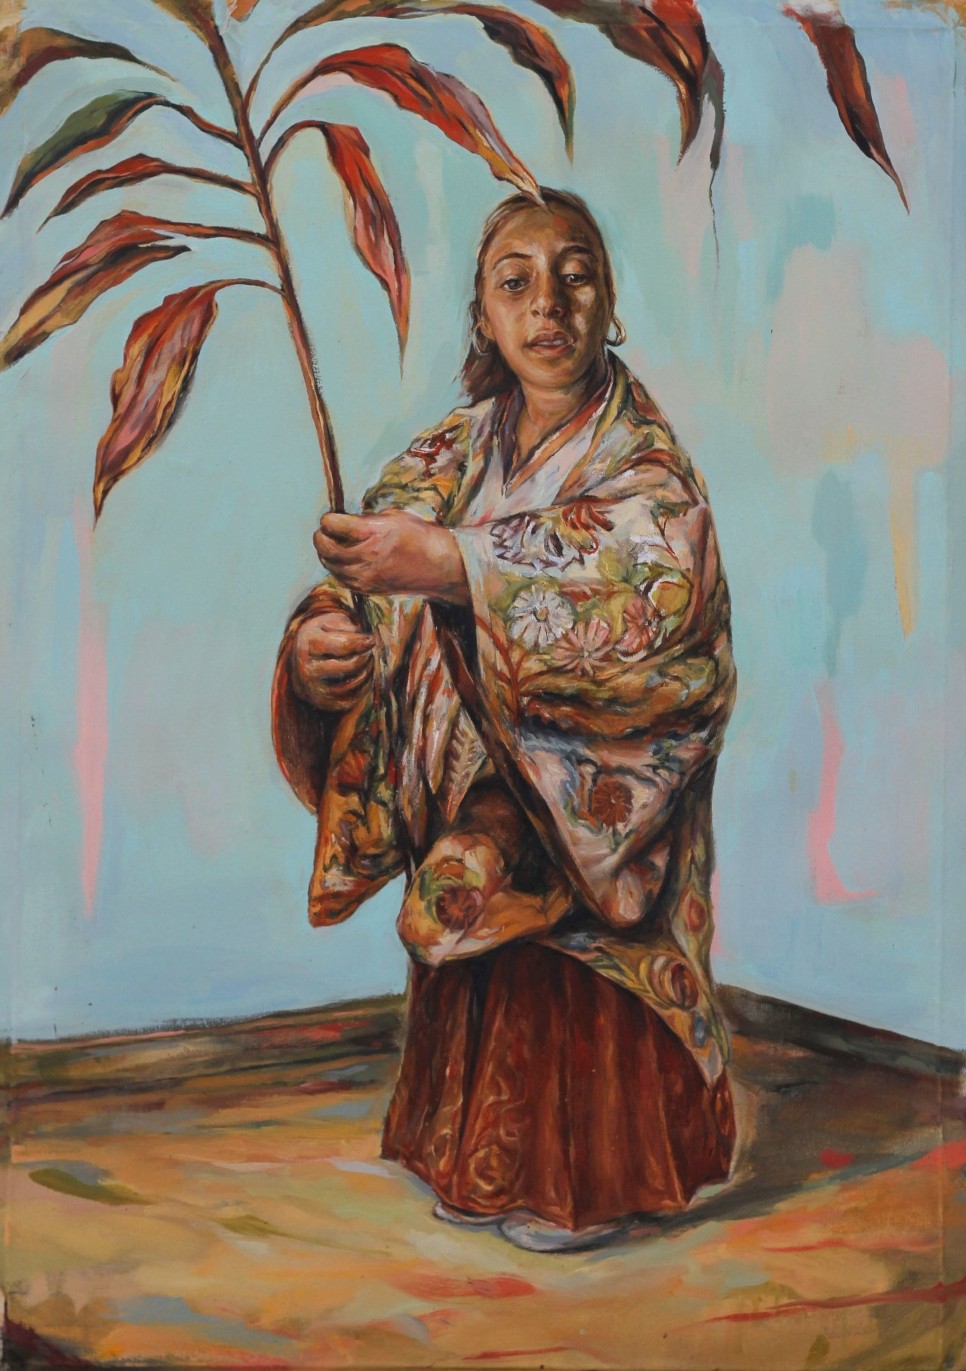 Dimitris Kokoris, Perempuan, oils on canvas, 70 x 100 cm, 2020